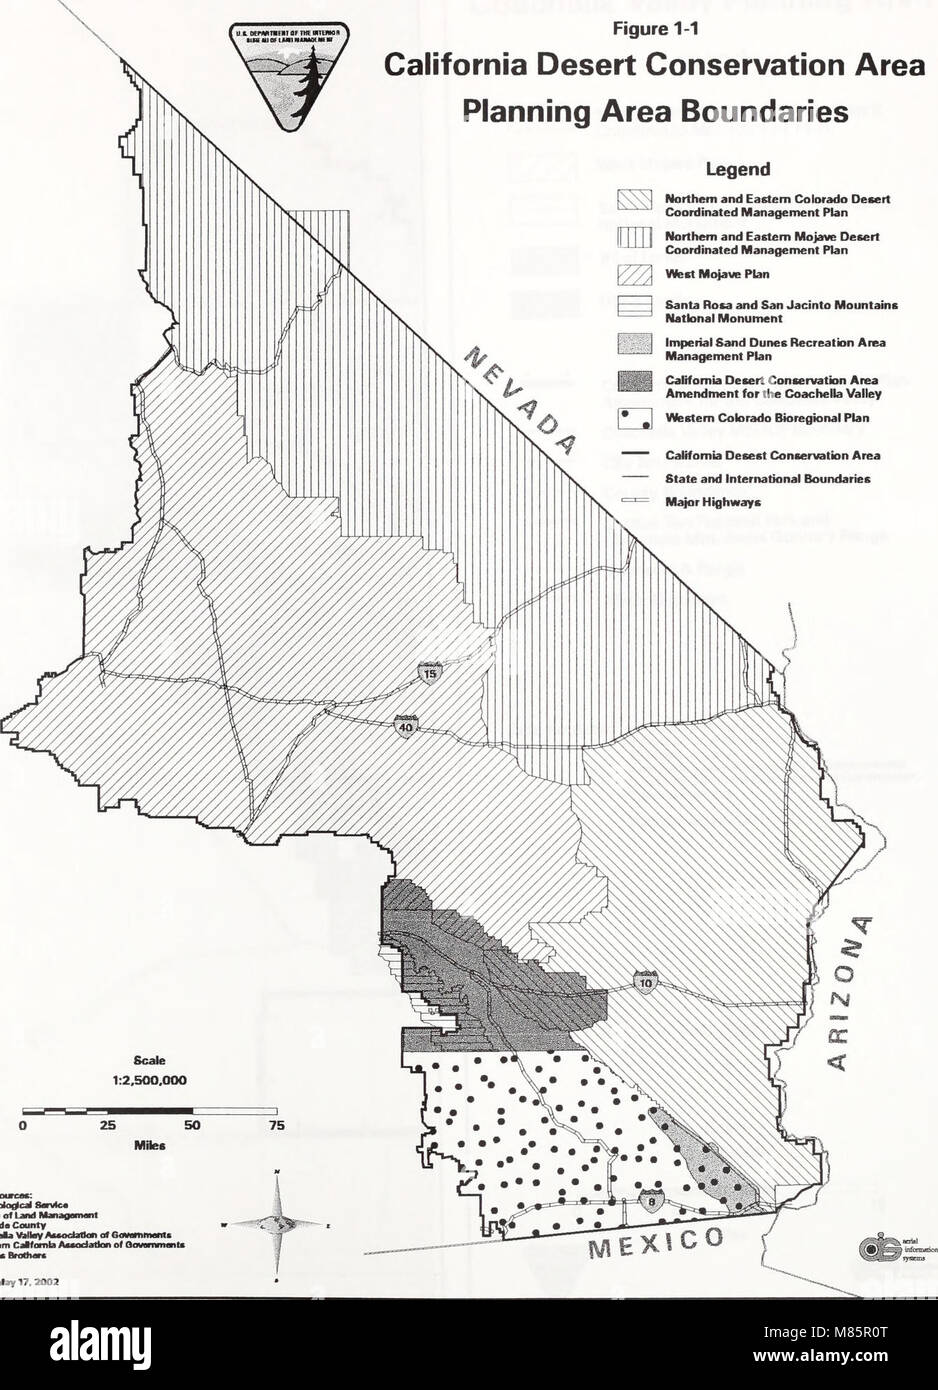 Draft California desert conservation area plan amendment for the Coachella Valley, Draft Santa Rosa and San Jacinto Mountains Trails management plan, and Draft environmental impact statement. (2002) (21003596241) Stock Photo